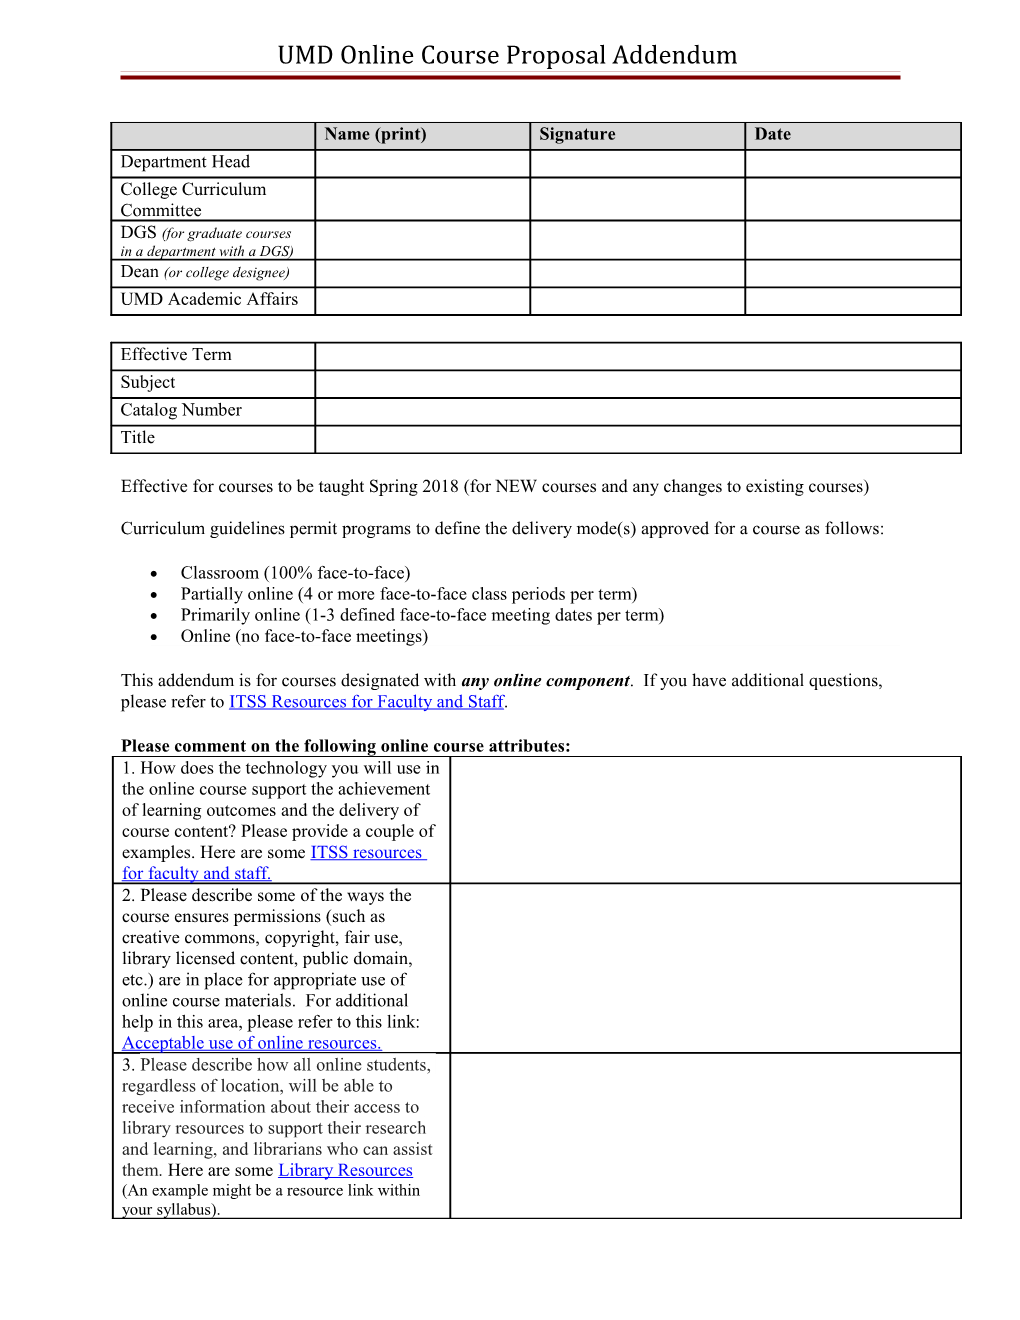 UMD Course Proposal Form